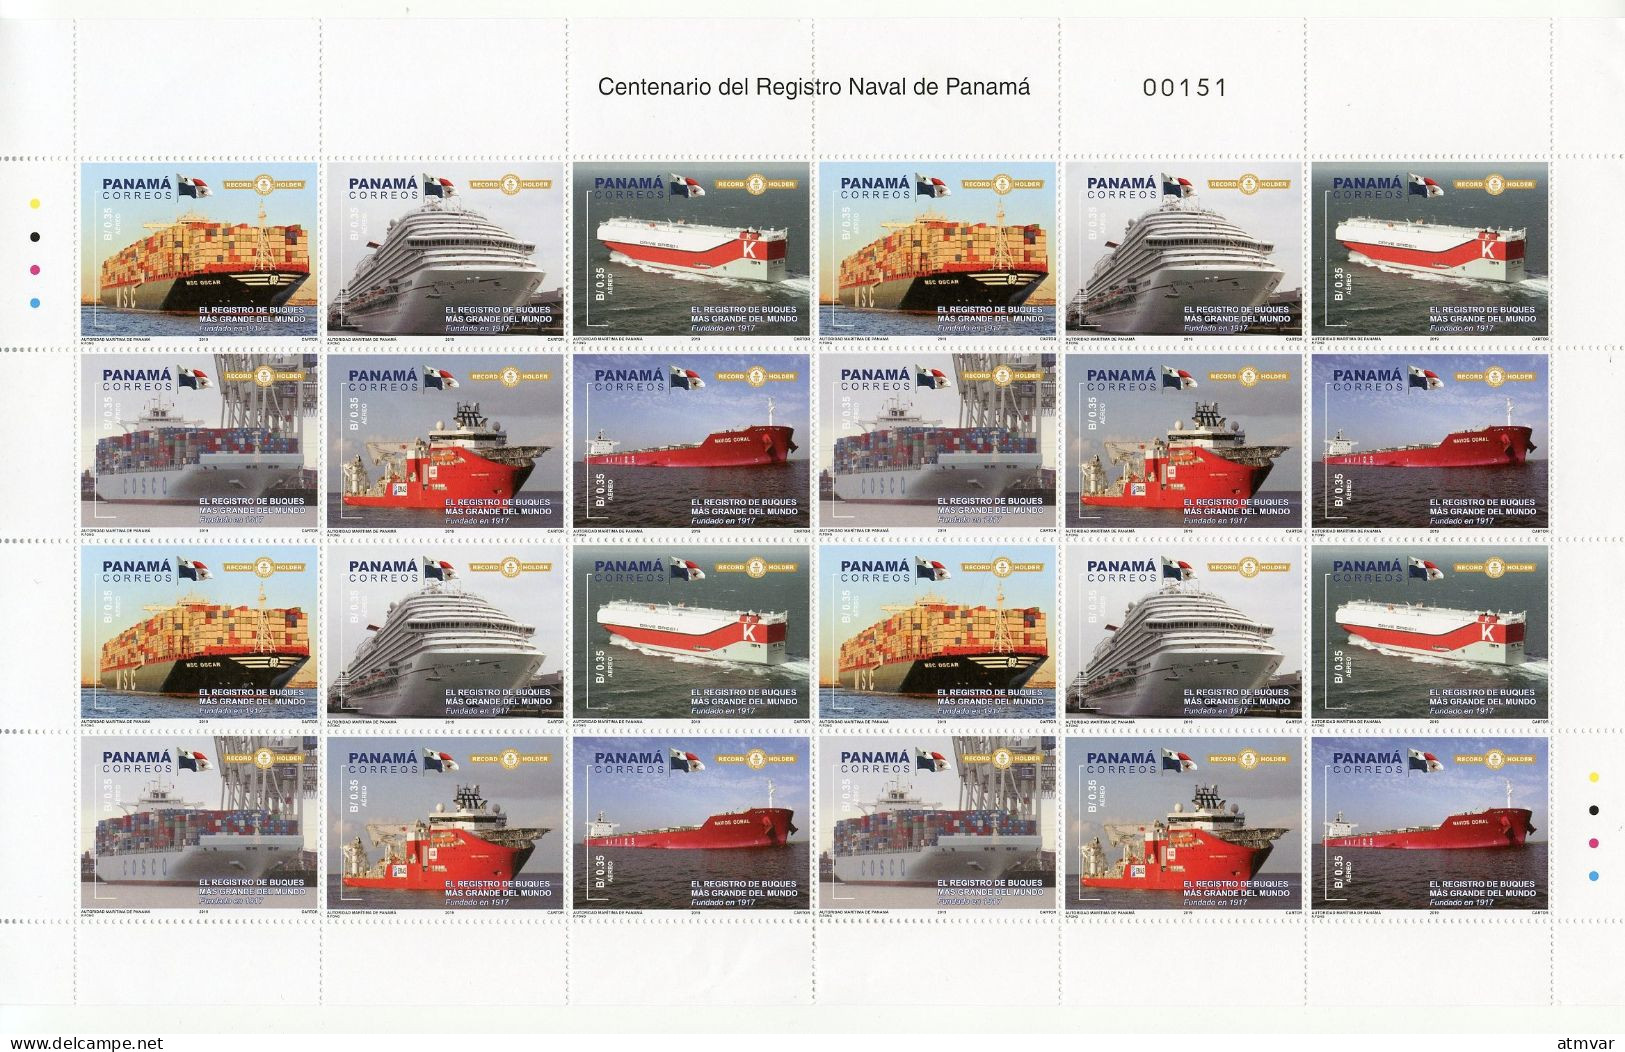 PANAMA (2019) Centenario Del Registro Naval, Canal, Vessel, Carguero, Container Ship, Bateau, Cruise - MINT - Panama